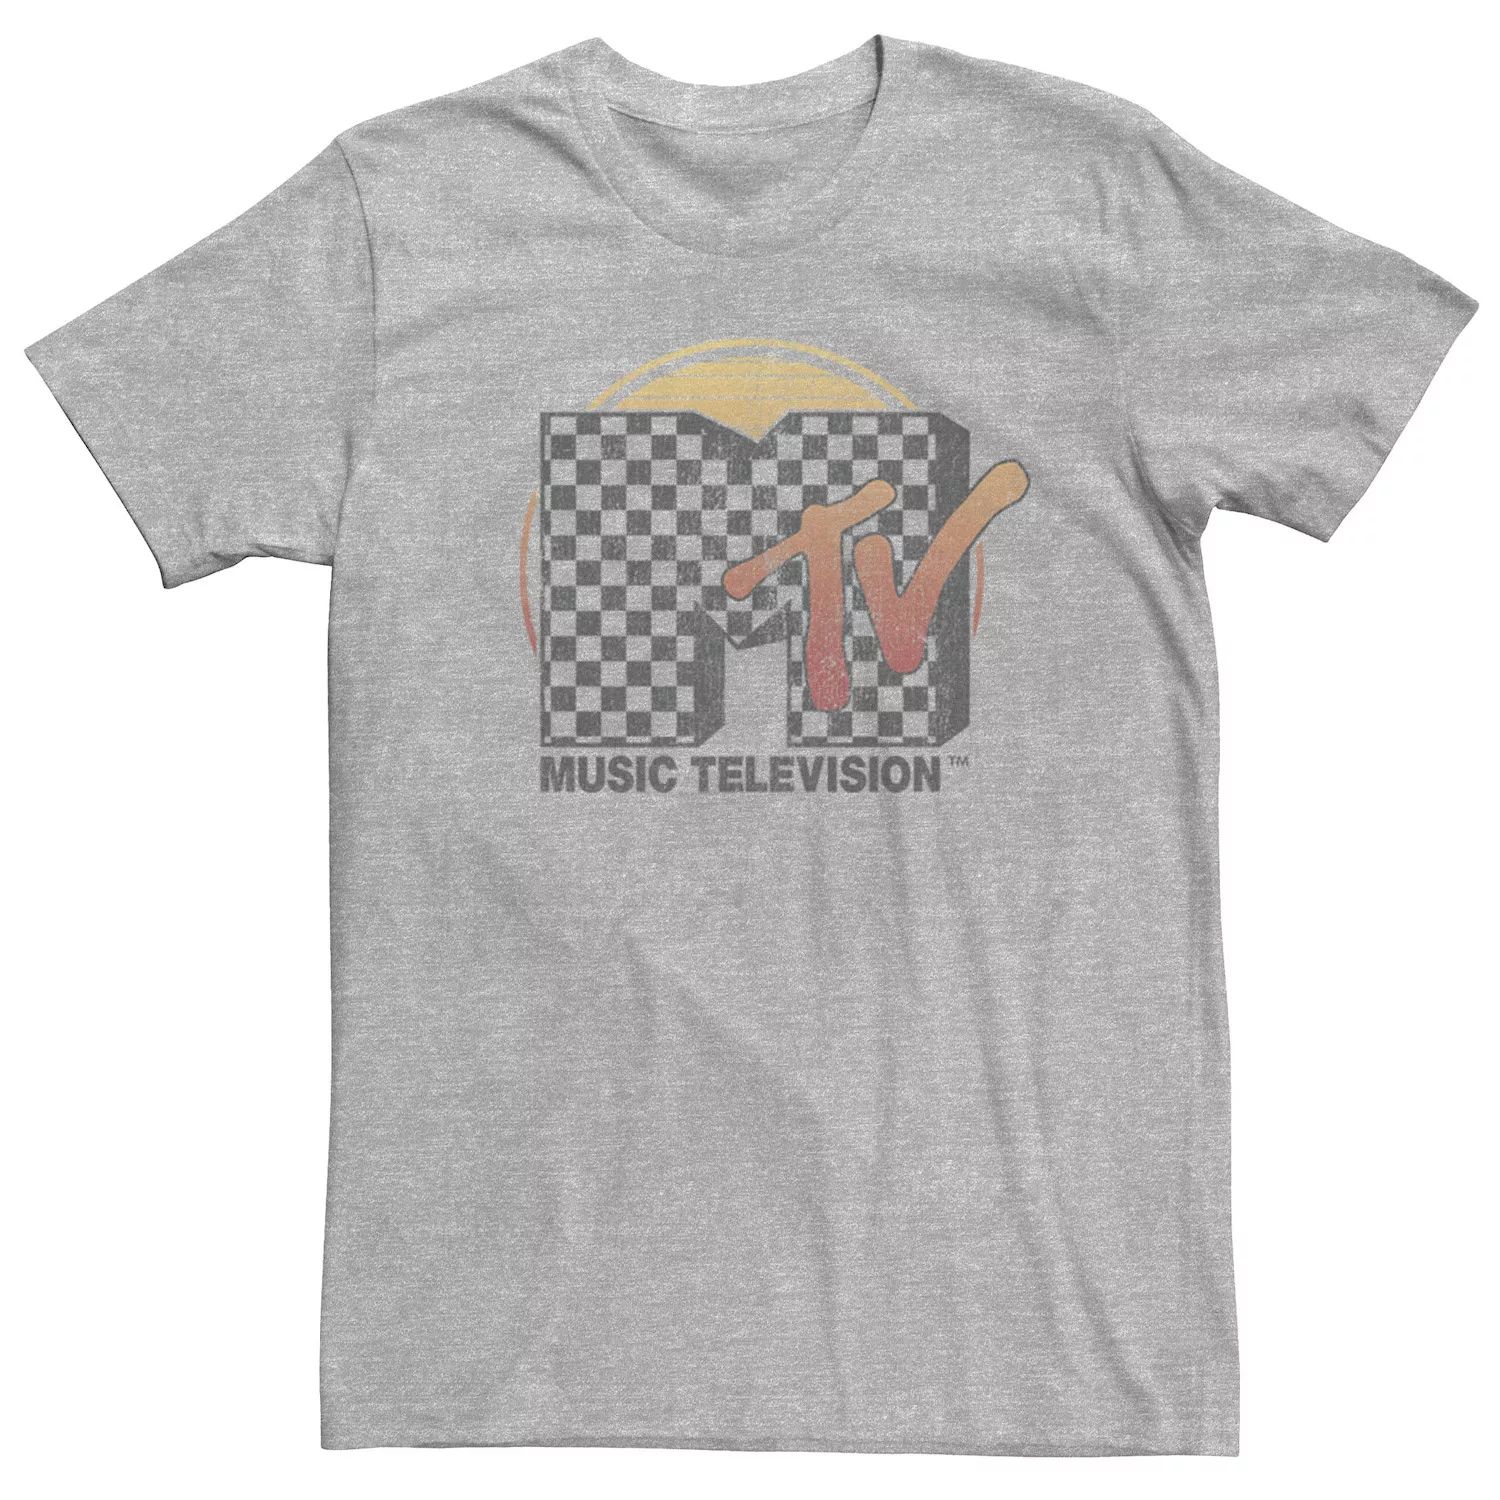 Мужская футболка с короткими рукавами и логотипом MTV в клетку Licensed Character